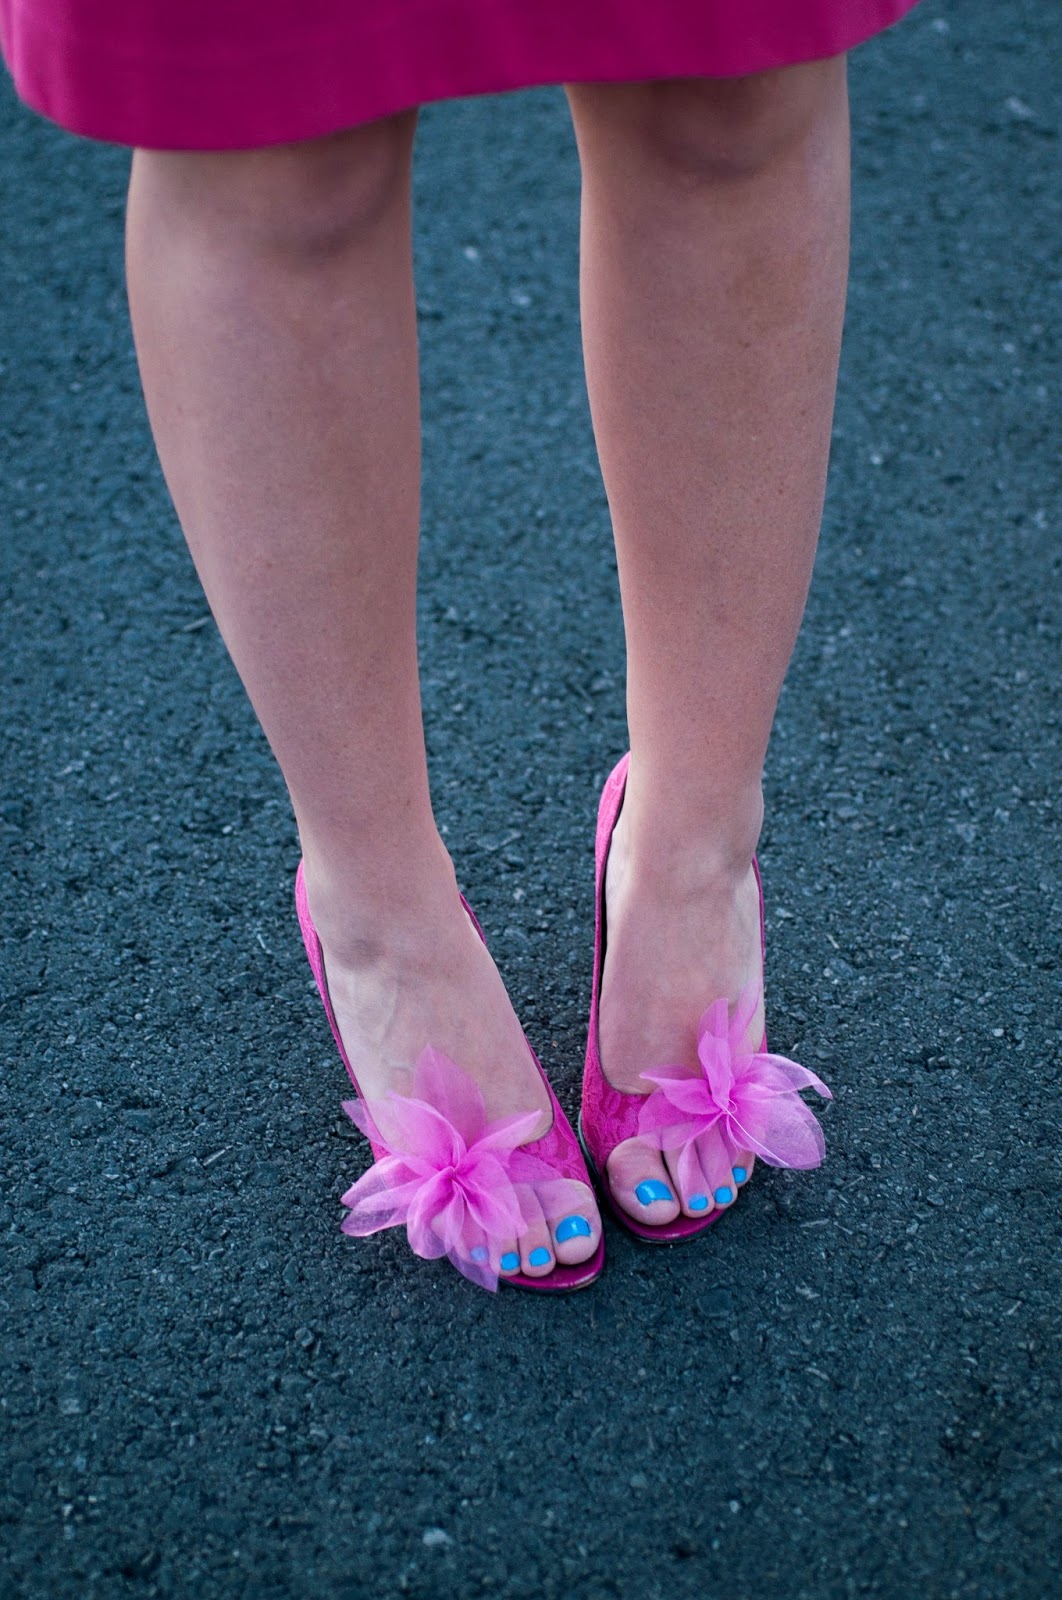 bebe, bebe shoes, flower shoes, lace shoes, hot pink heels, hot pink shoes, designer shoes, ootd